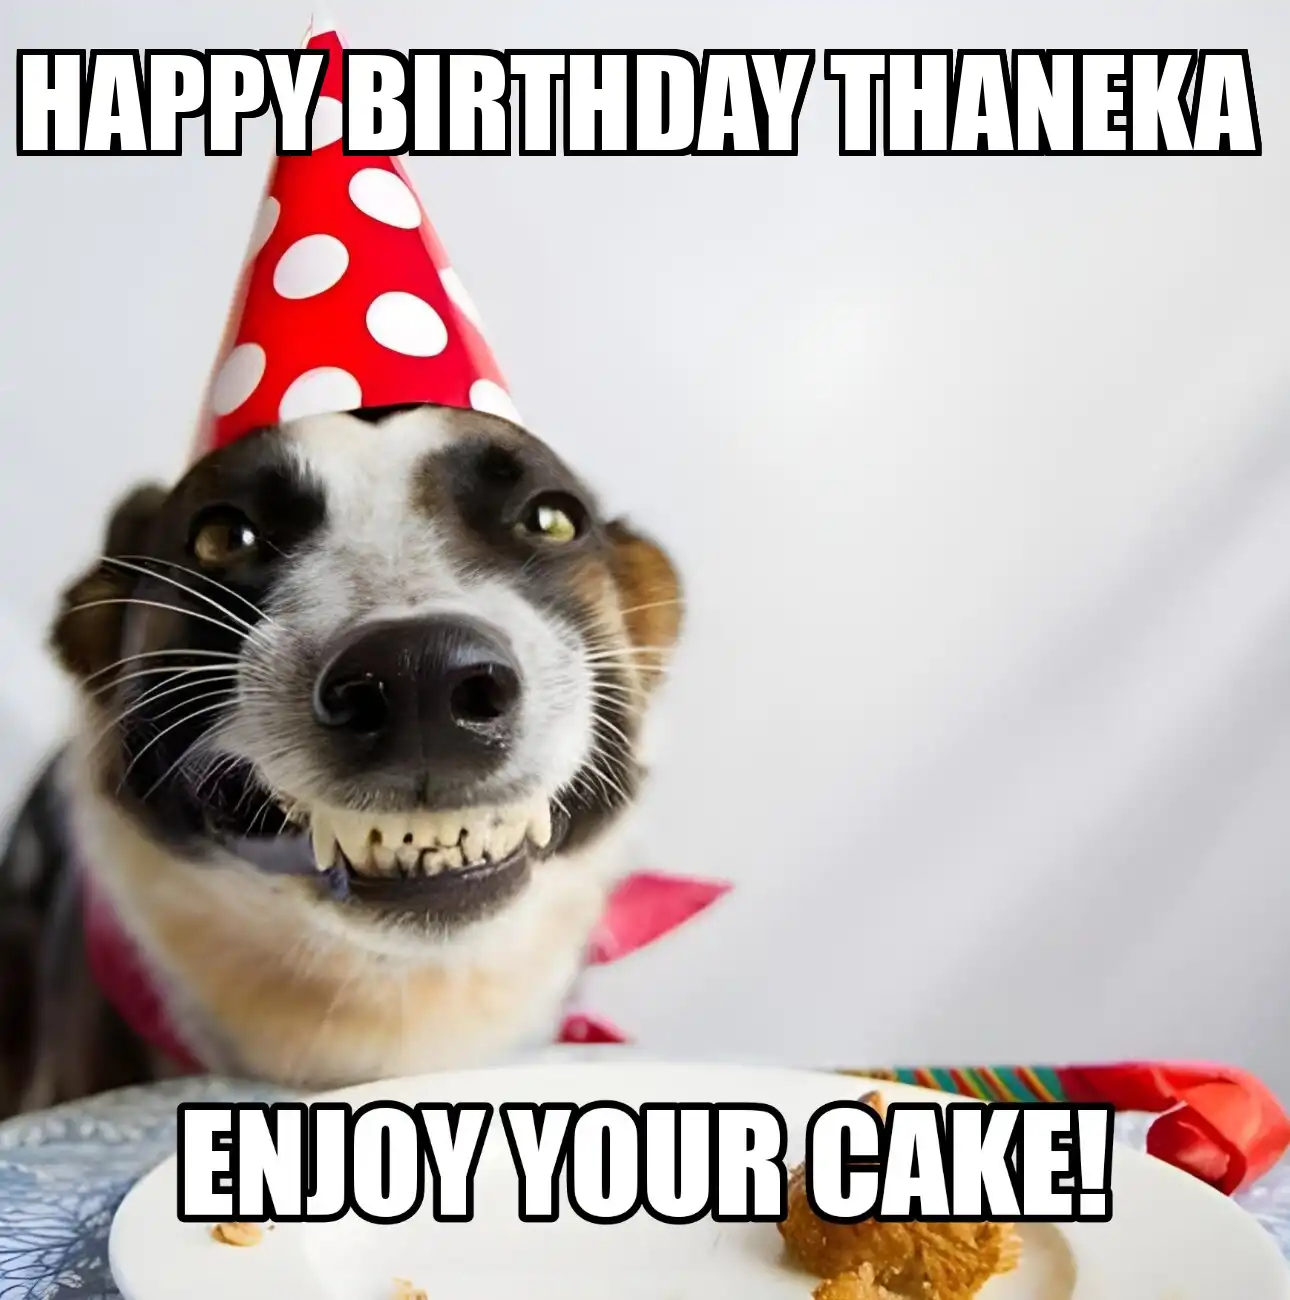 Happy Birthday Thaneka Enjoy Your Cake Dog Meme